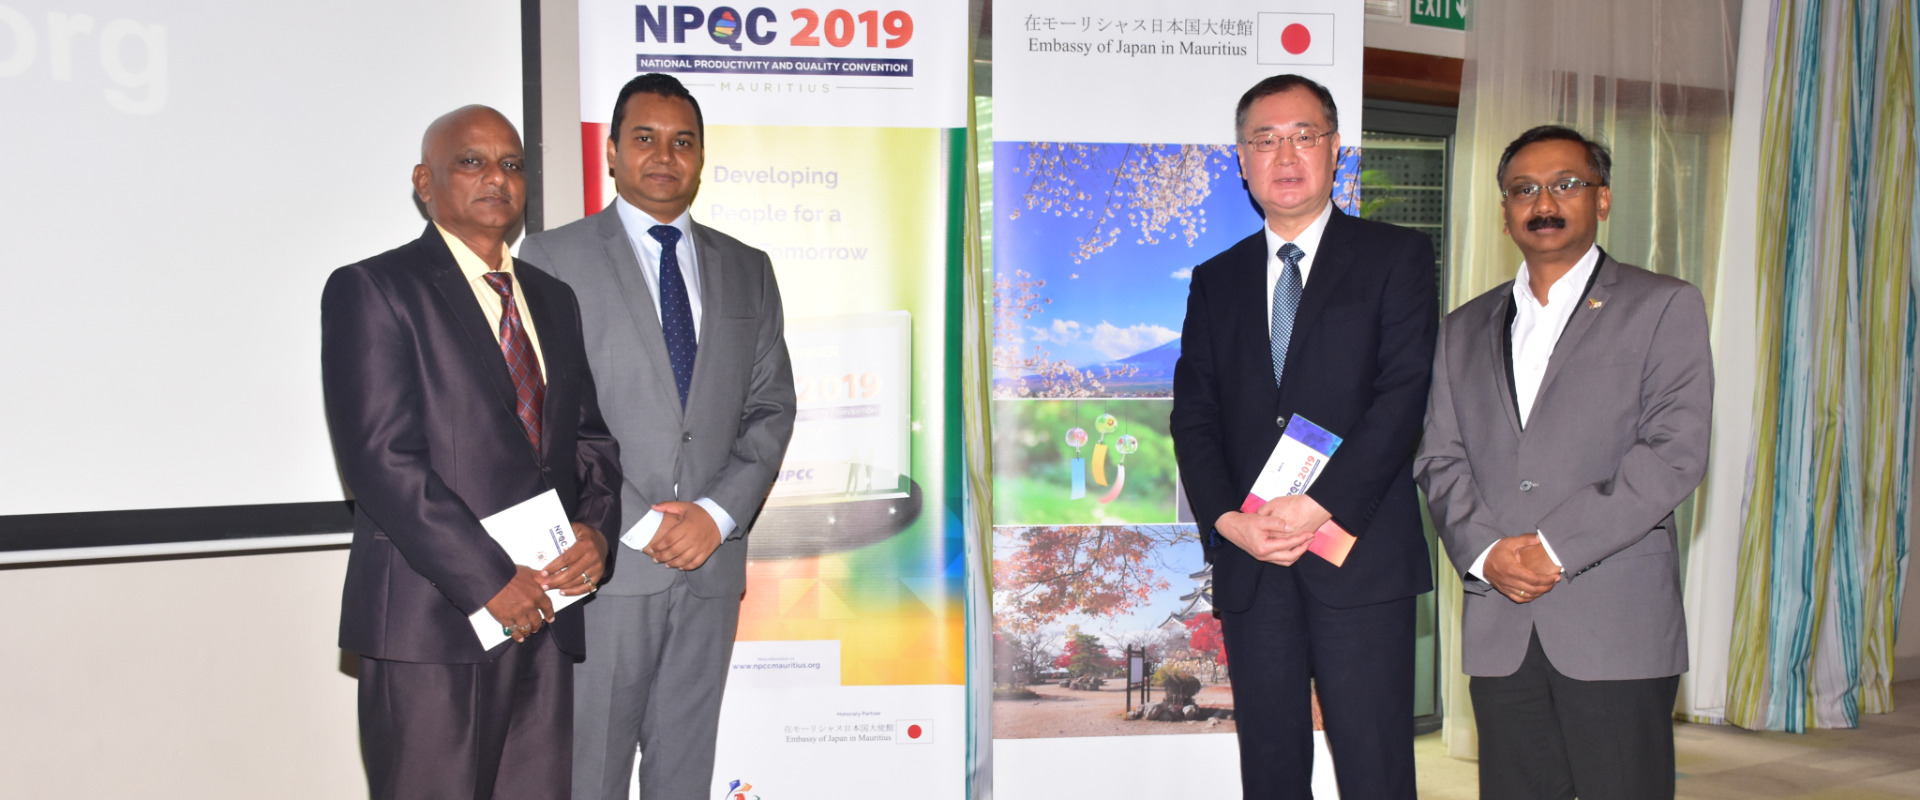 Le NPCC lance NPQC 2019